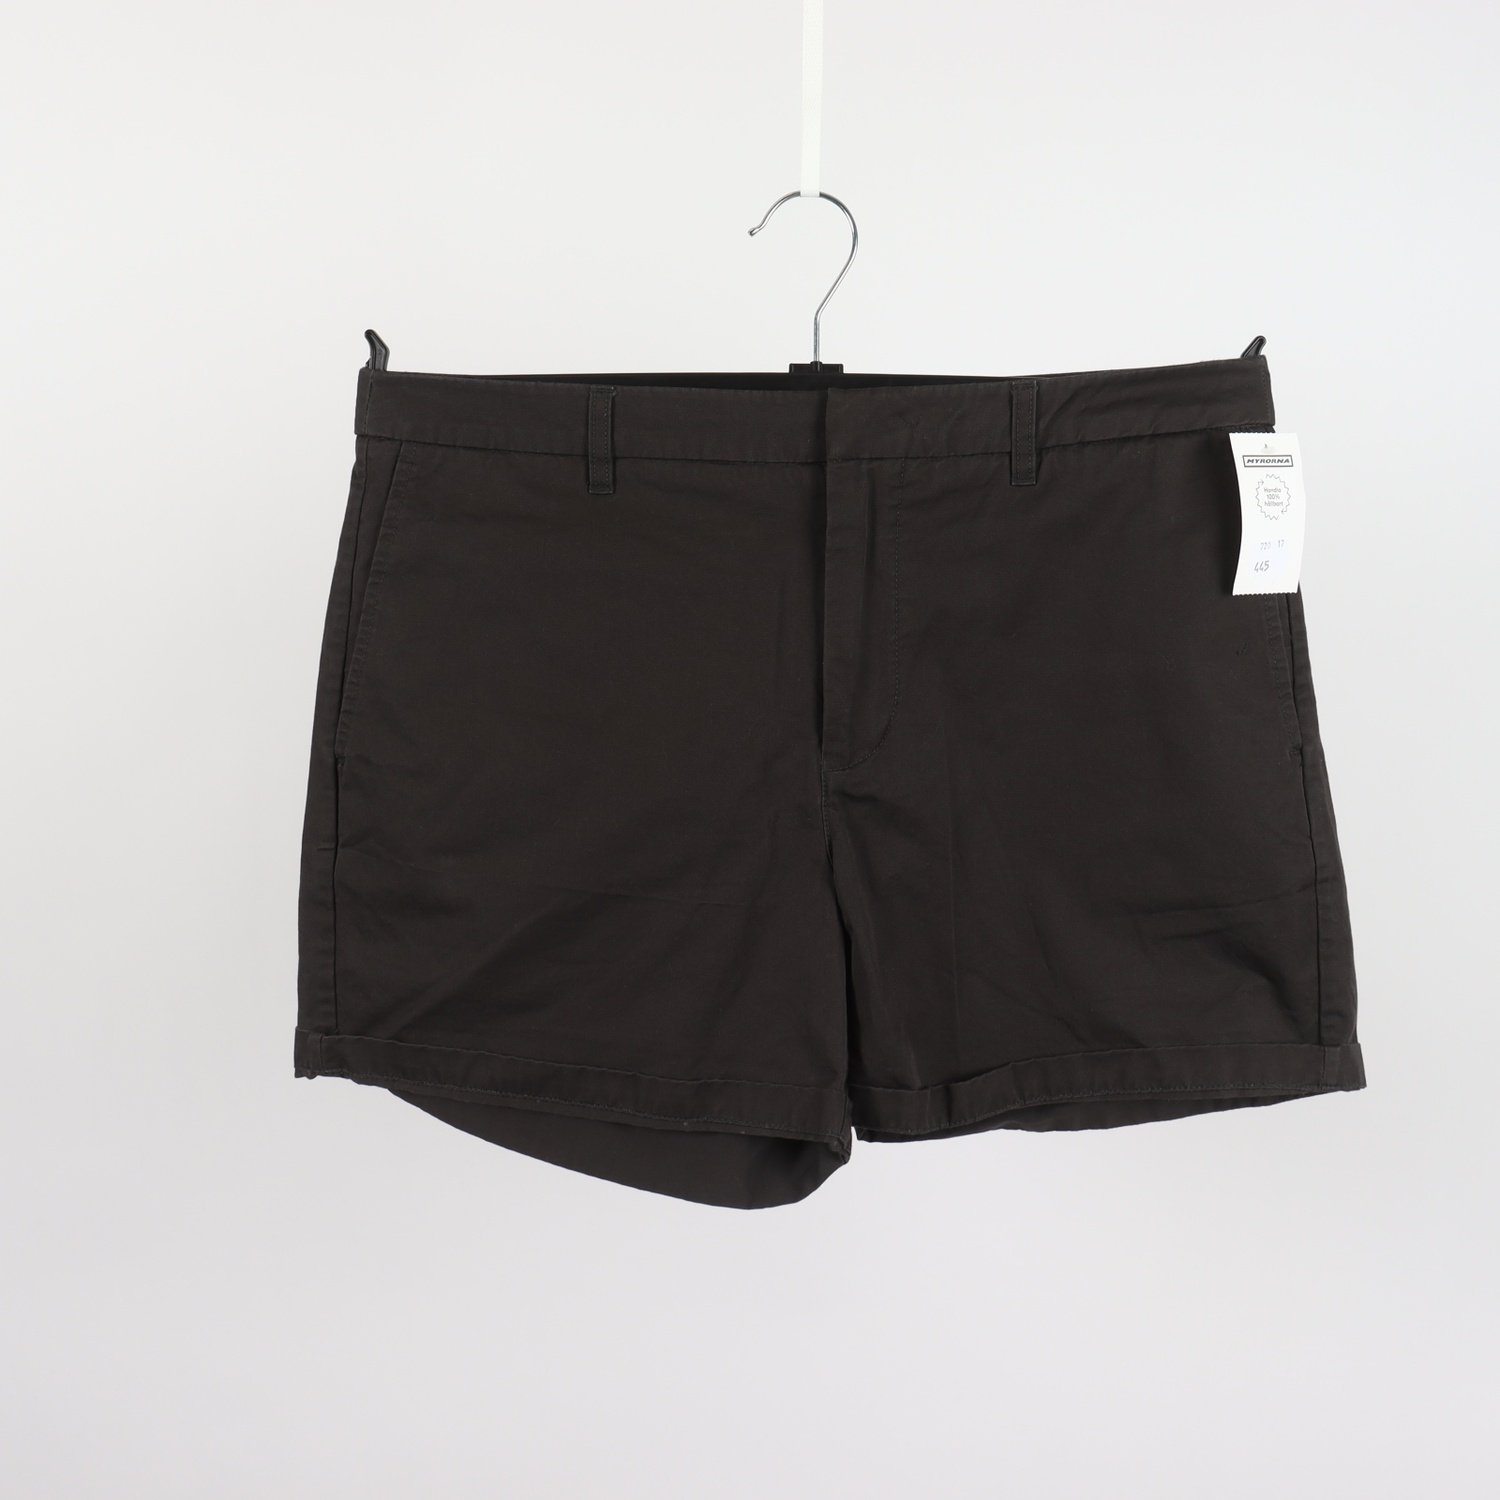 Shorts, Filippa K, grå, stl. L